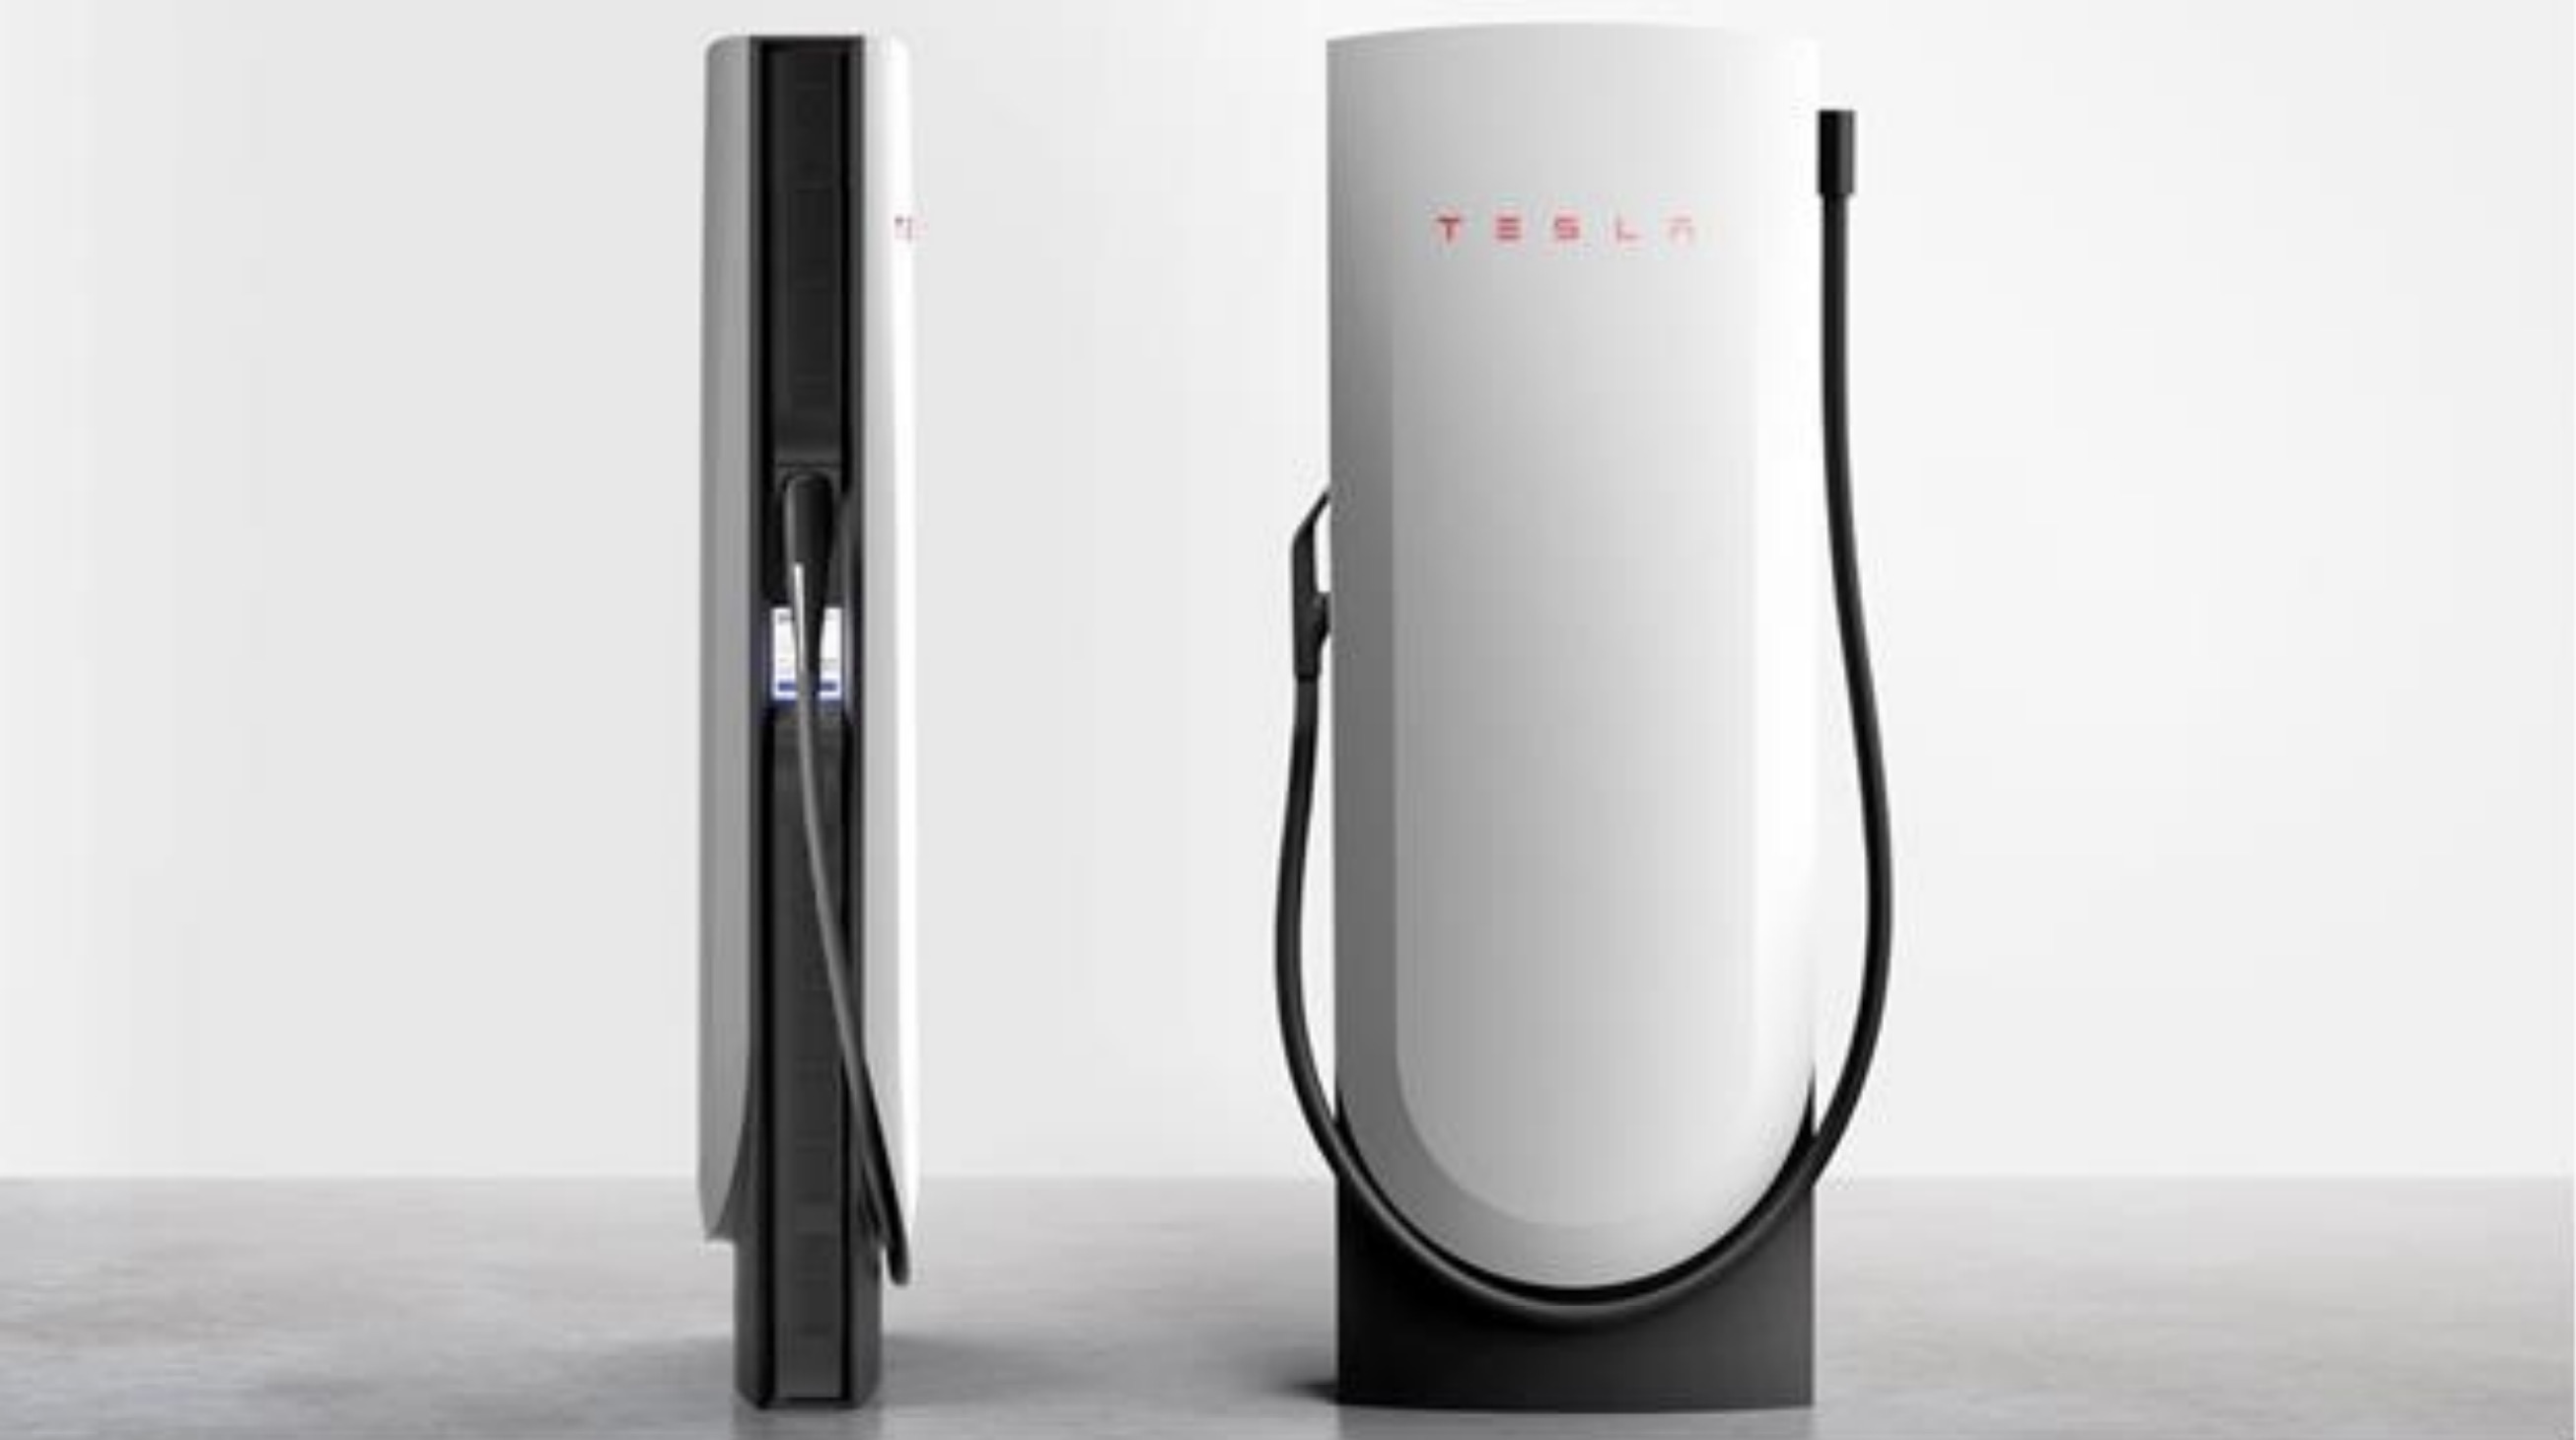 ‘Supercharger Inc:’ Should Tesla spin off its Supercharger network? (emoltzen.substack.com)